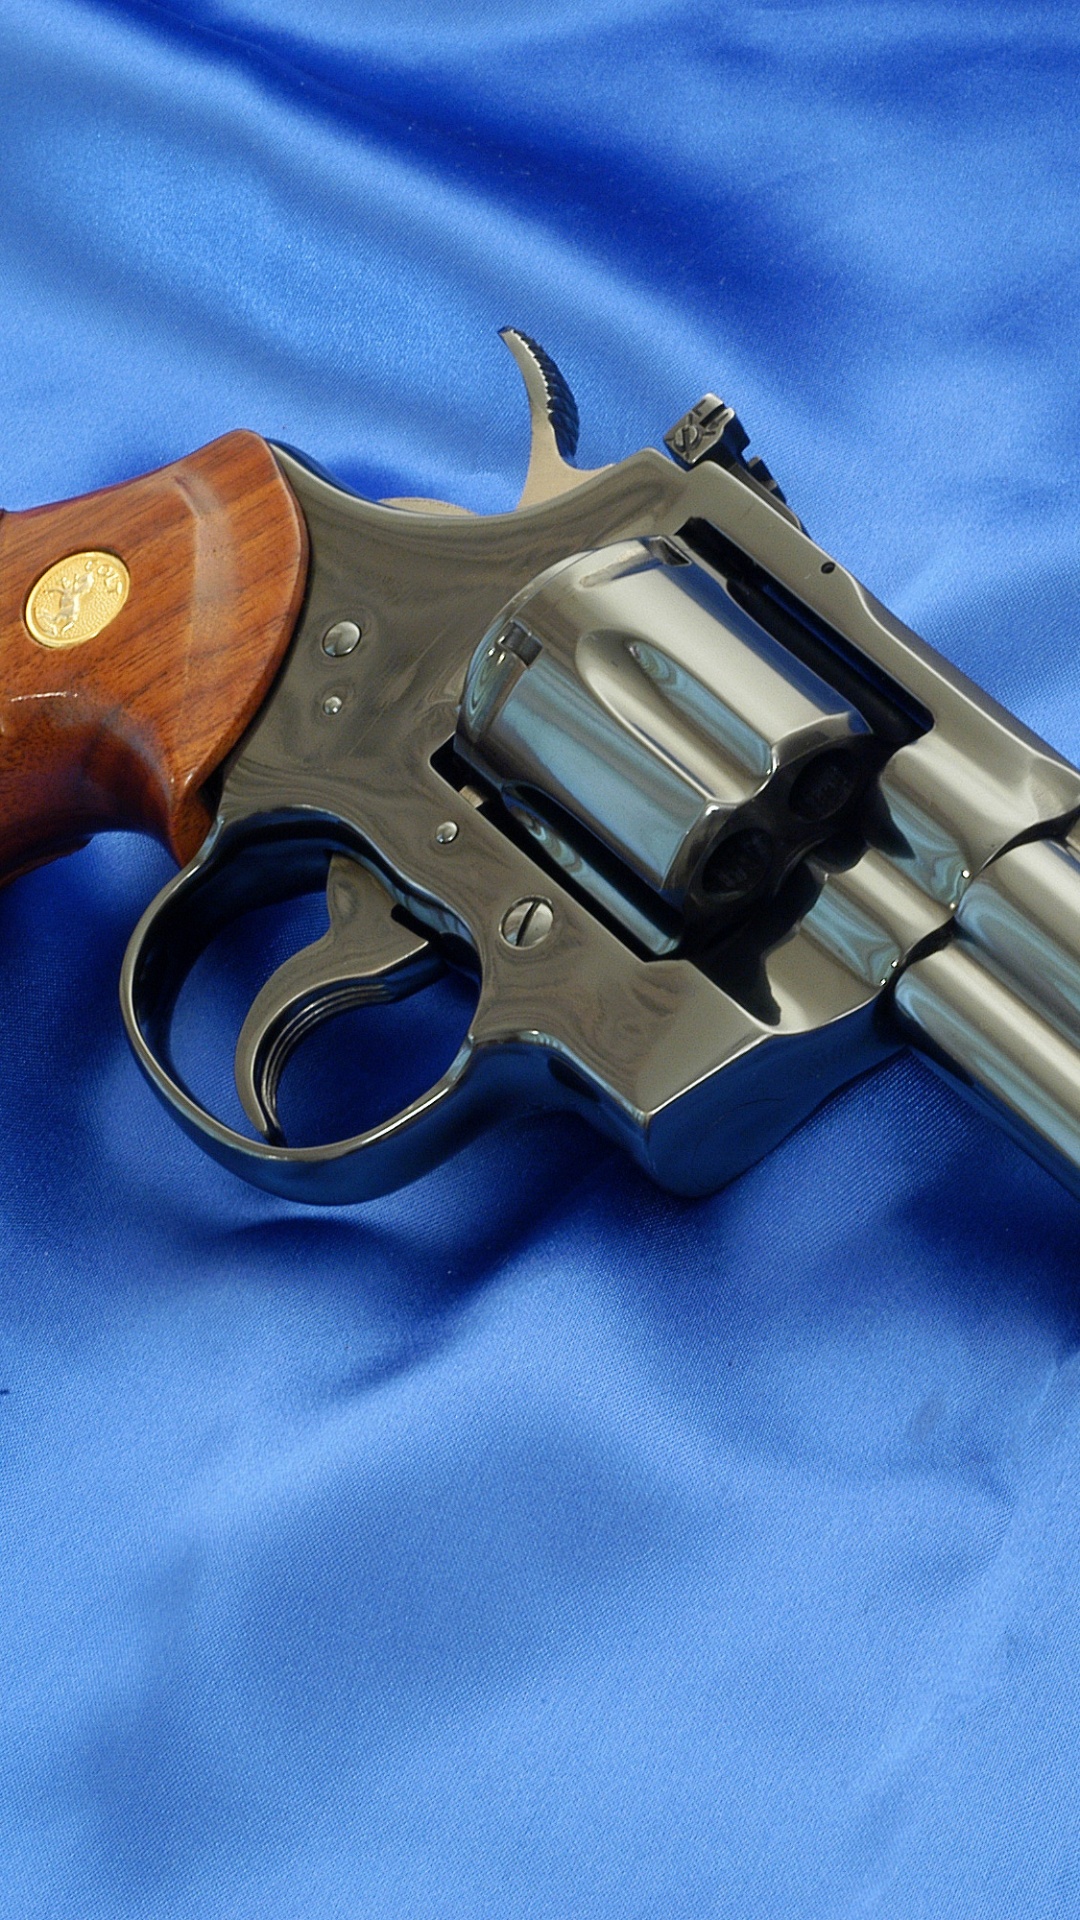 Handfeuerwaffe, M1911 Pistole, Feuerwaffe, Revolver, Trigger. Wallpaper in 1080x1920 Resolution